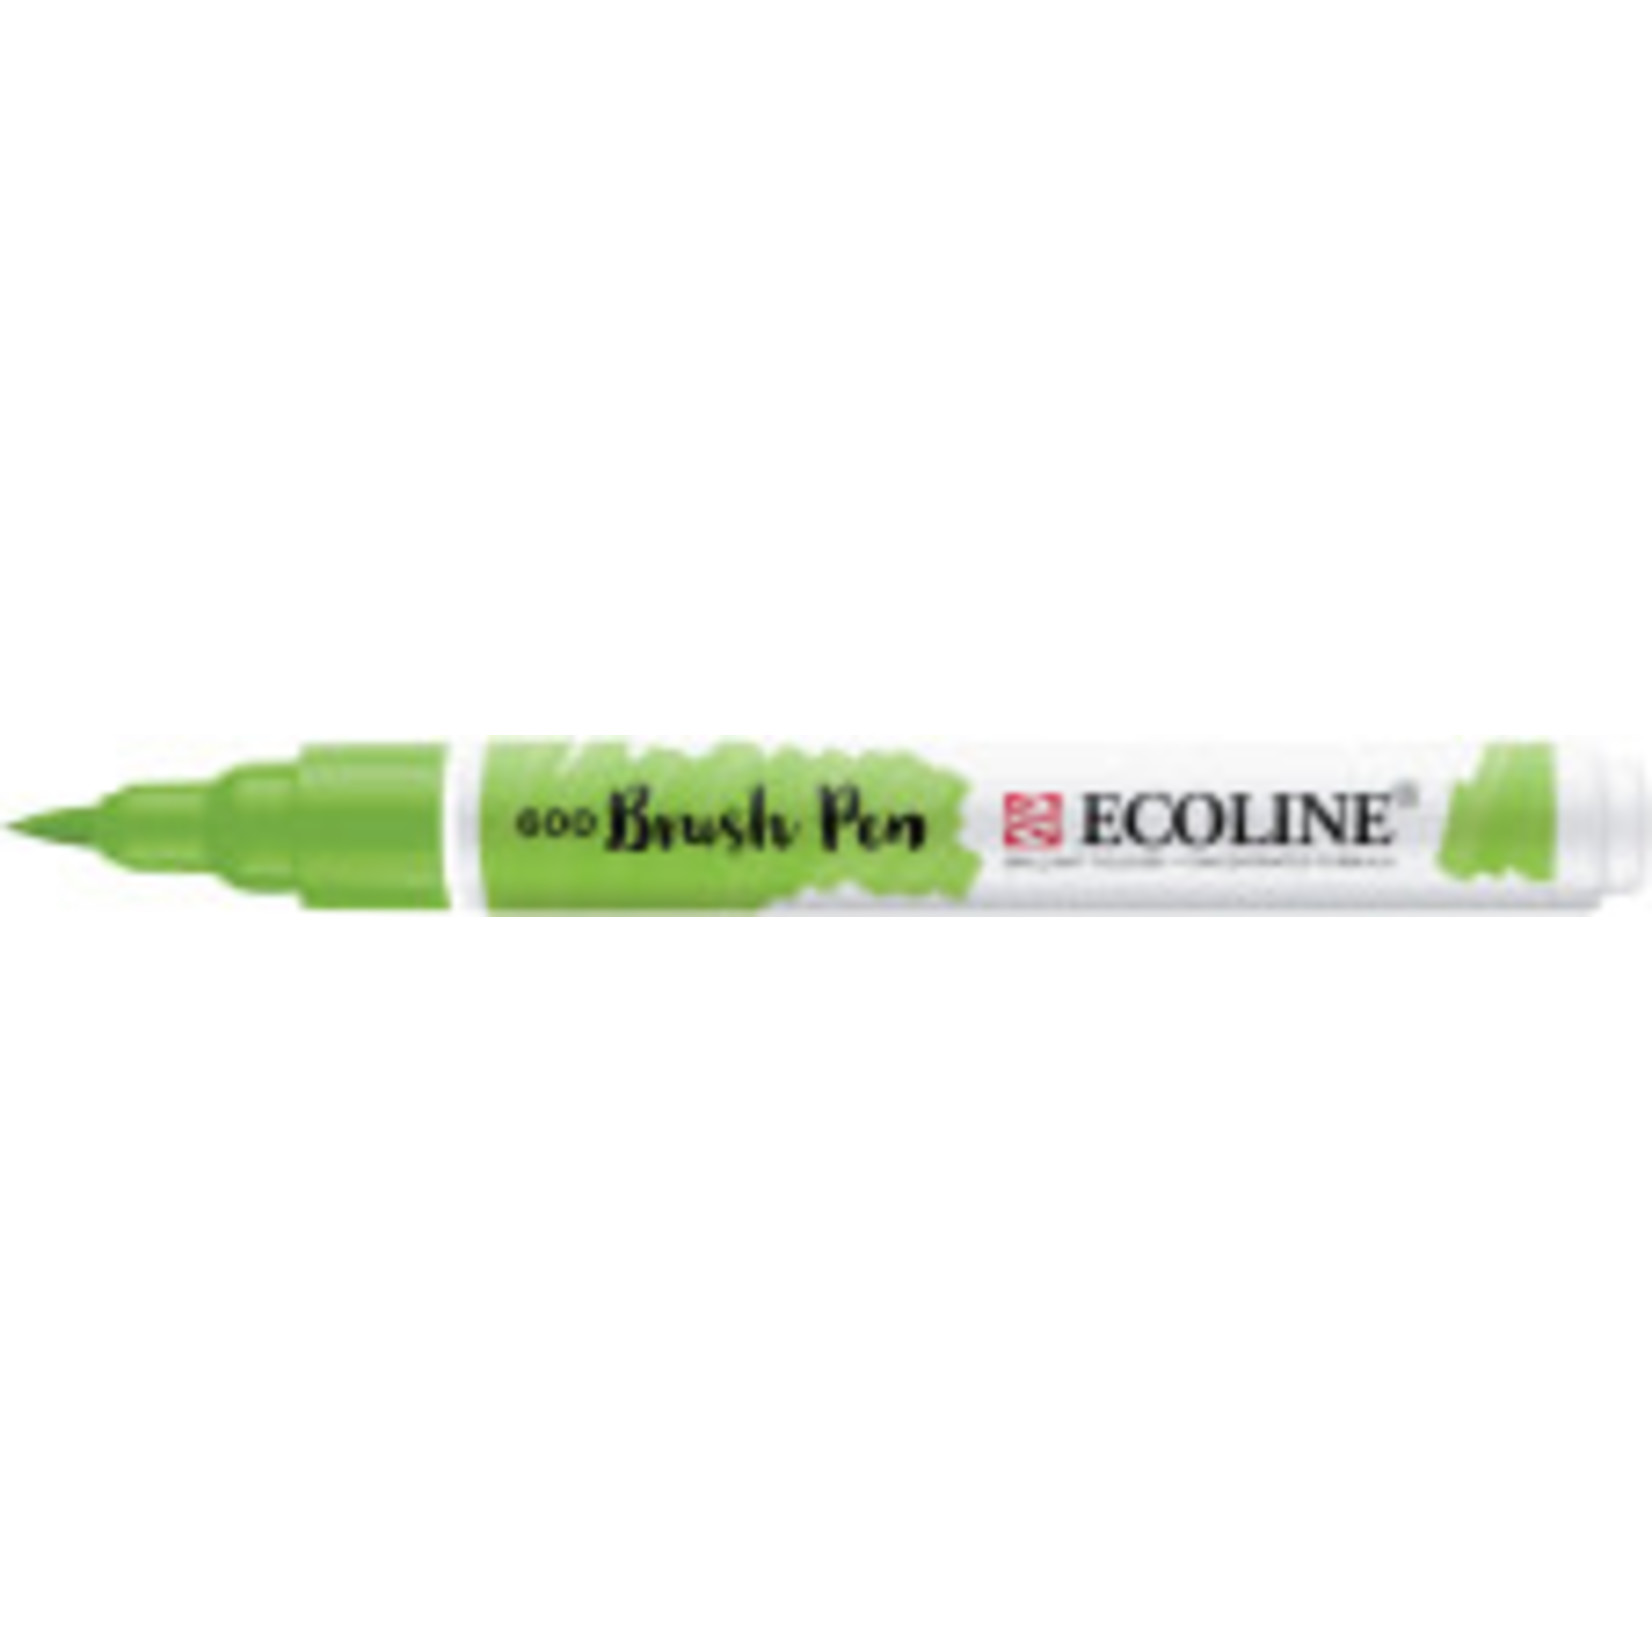 ROYAL TALENS NORTH AMERIC Brush Pen "Ecoline" waterverf - Green n° 600